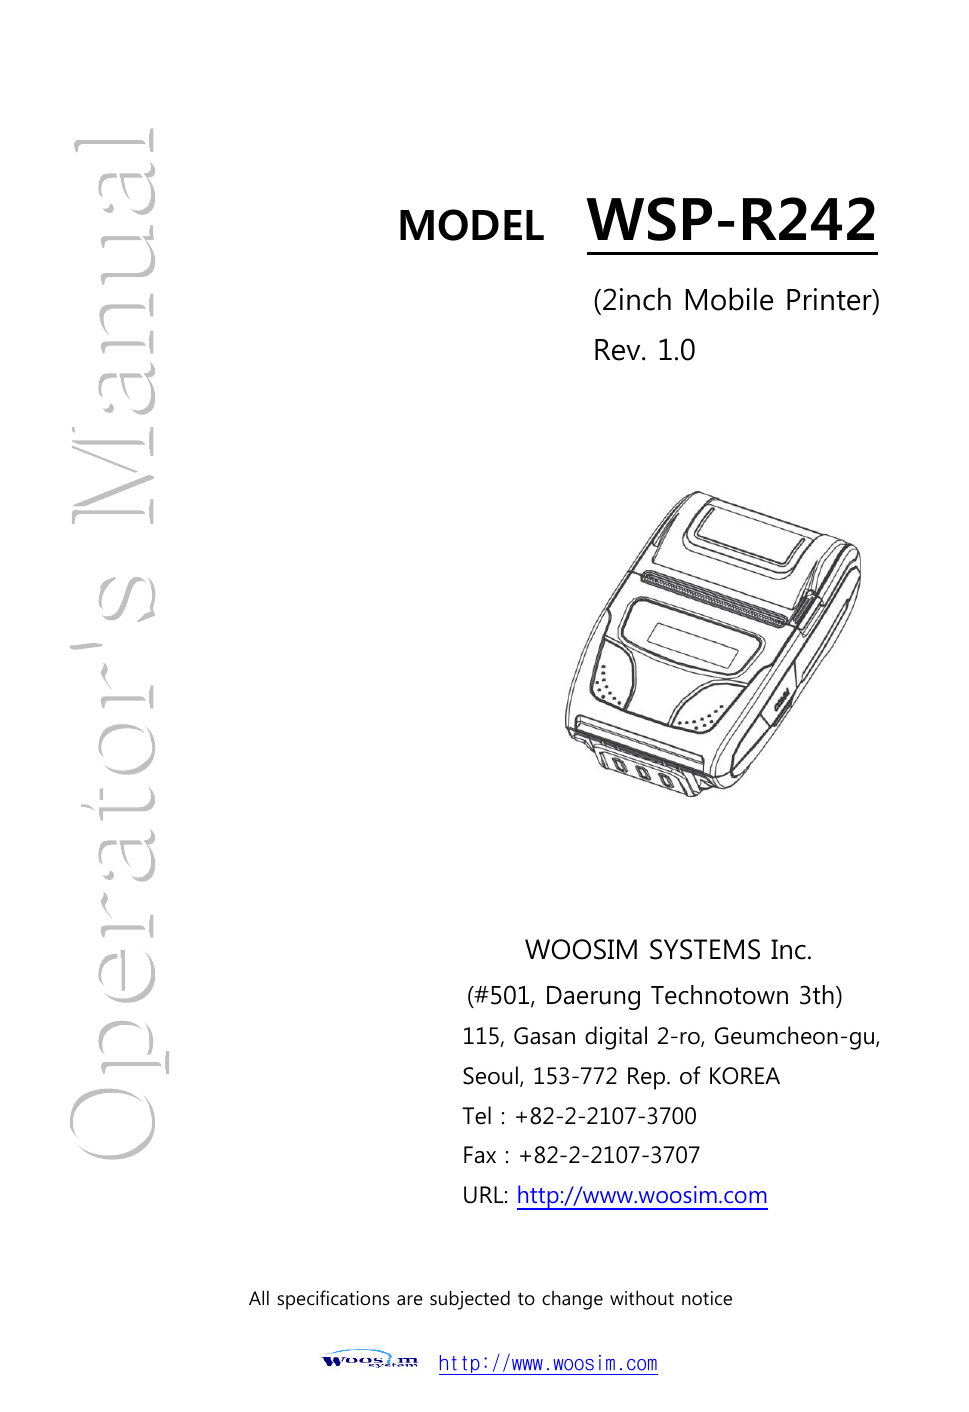  http://www.woosim.com                                                        MODEL    WSP-R242    (2inch Mobile Printer)   Rev. 1.0 WOOSIM SYSTEMS Inc. (#501, Daerung Technotown 3th) 115, Gasan digital 2-ro, Geumcheon-gu, Seoul, 153-772 Rep. of KOREA Tel : +82-2-2107-3700 Fax : +82-2-2107-3707 URL: http://www.woosim.com  All specifications are subjected to change without notice  